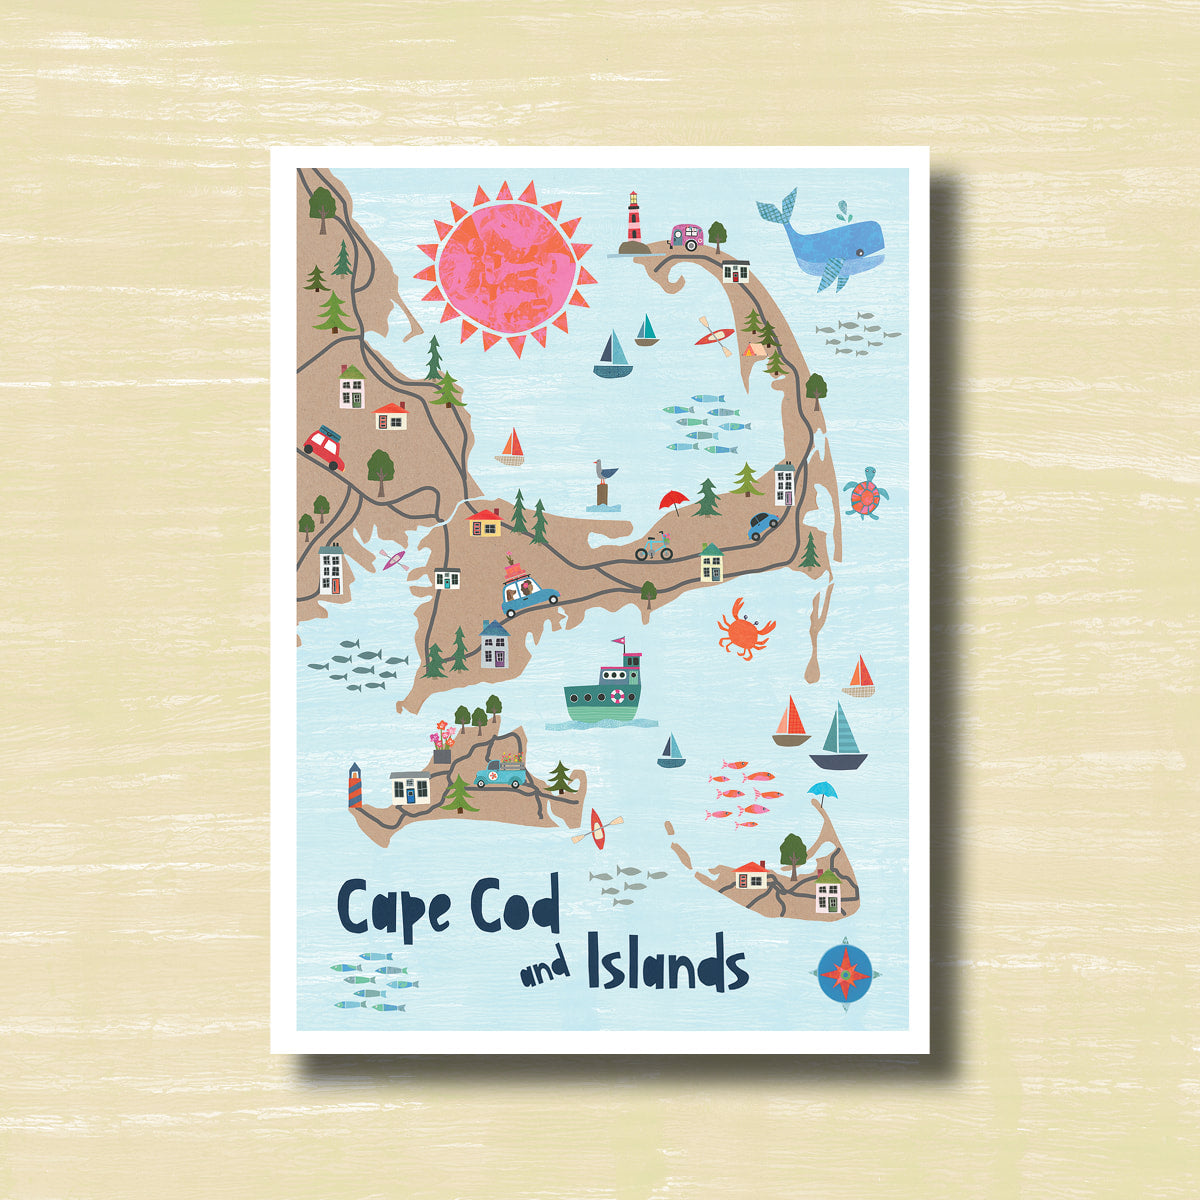 Cape Cod & Islands - Greeting Card